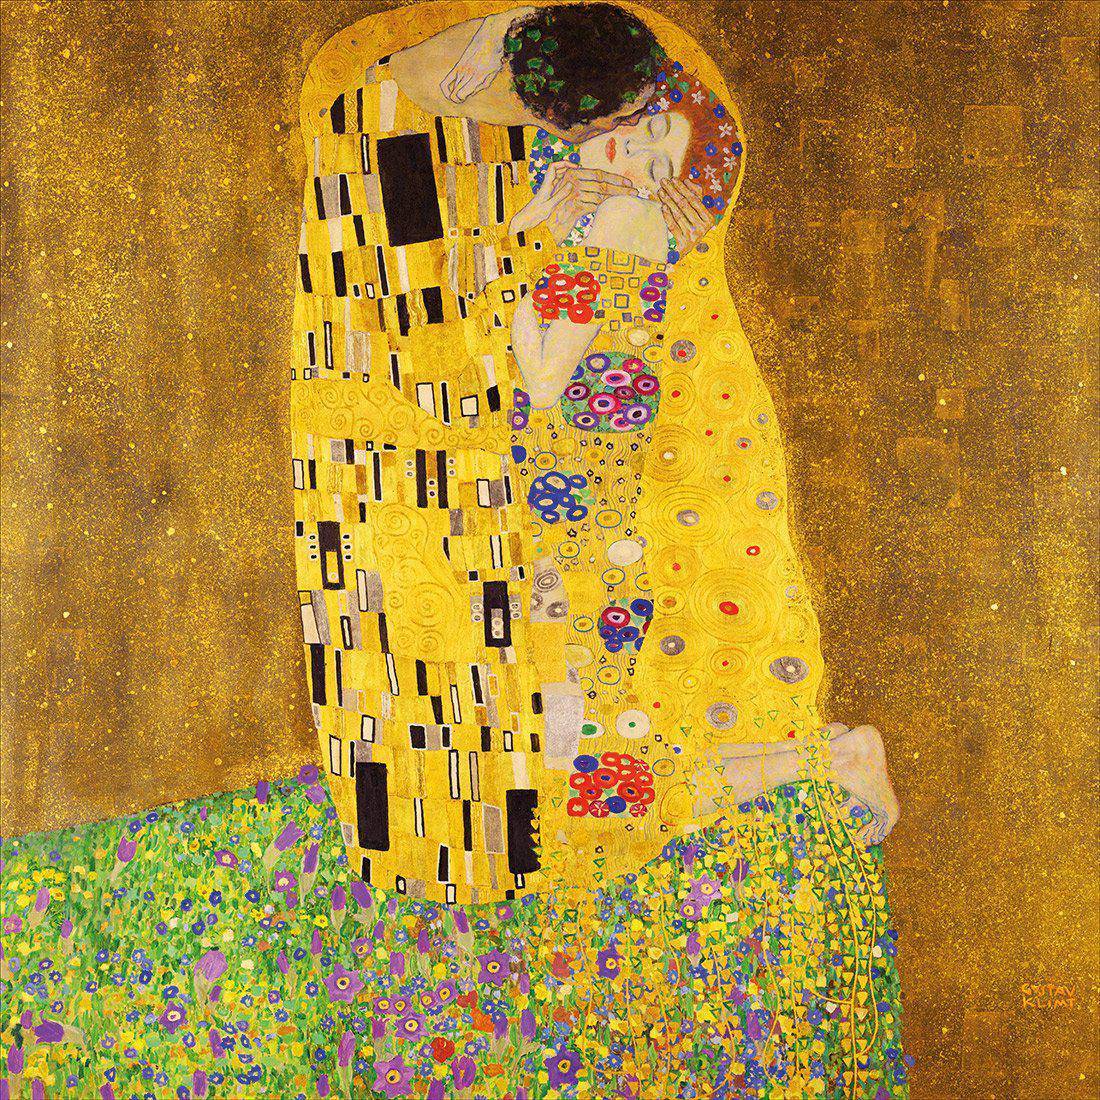 The Kiss - Gustav Klimt Canvas Art-Canvas-Wall Art Designs-30x30cm-Canvas - No Frame-Wall Art Designs